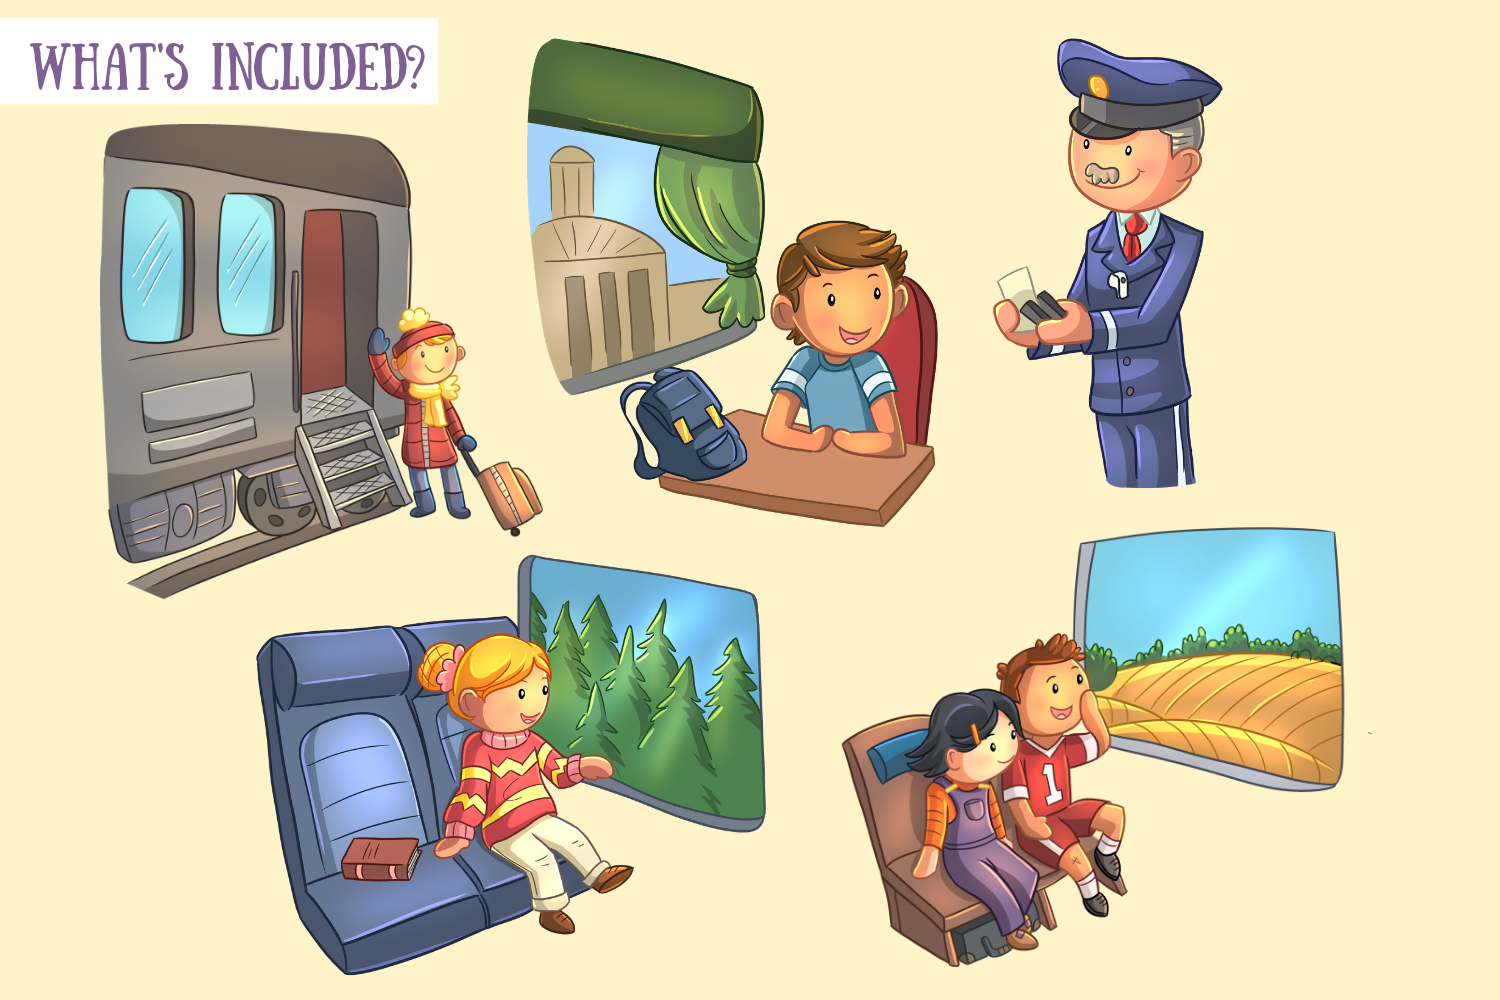 travel by train cartoon